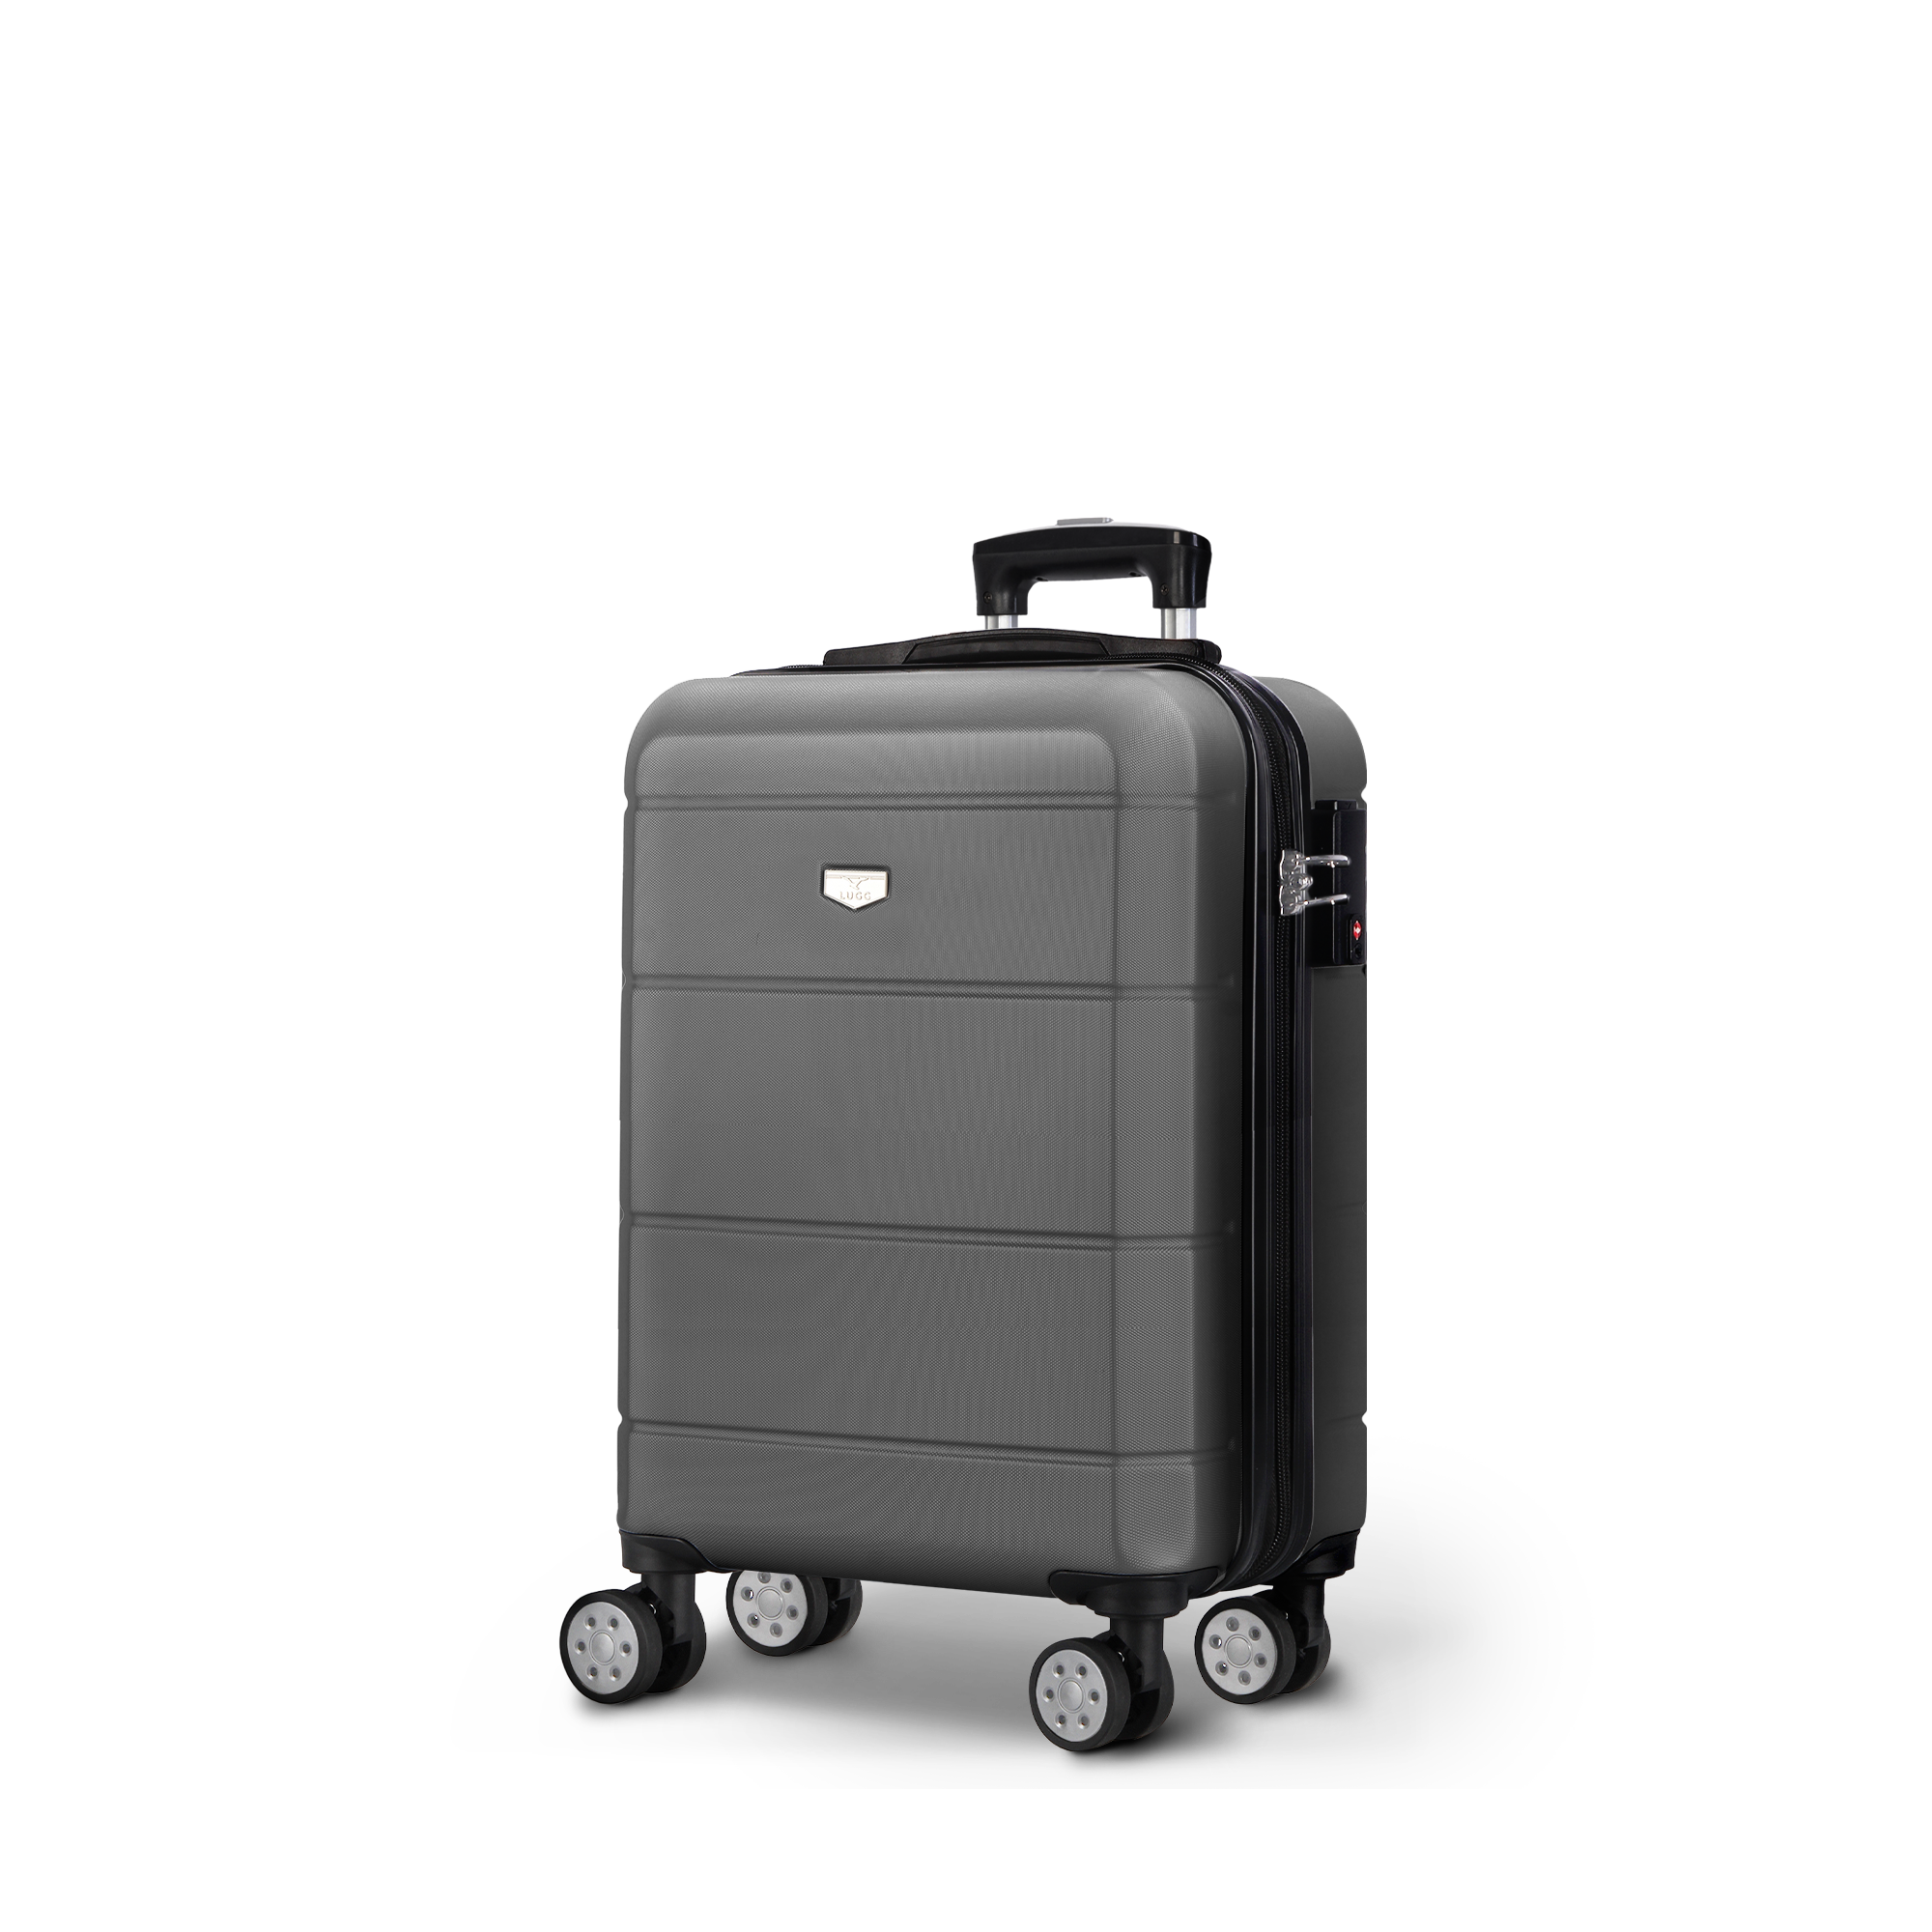 Jetset 20-Inch Suitcase in Gunmetal Grey